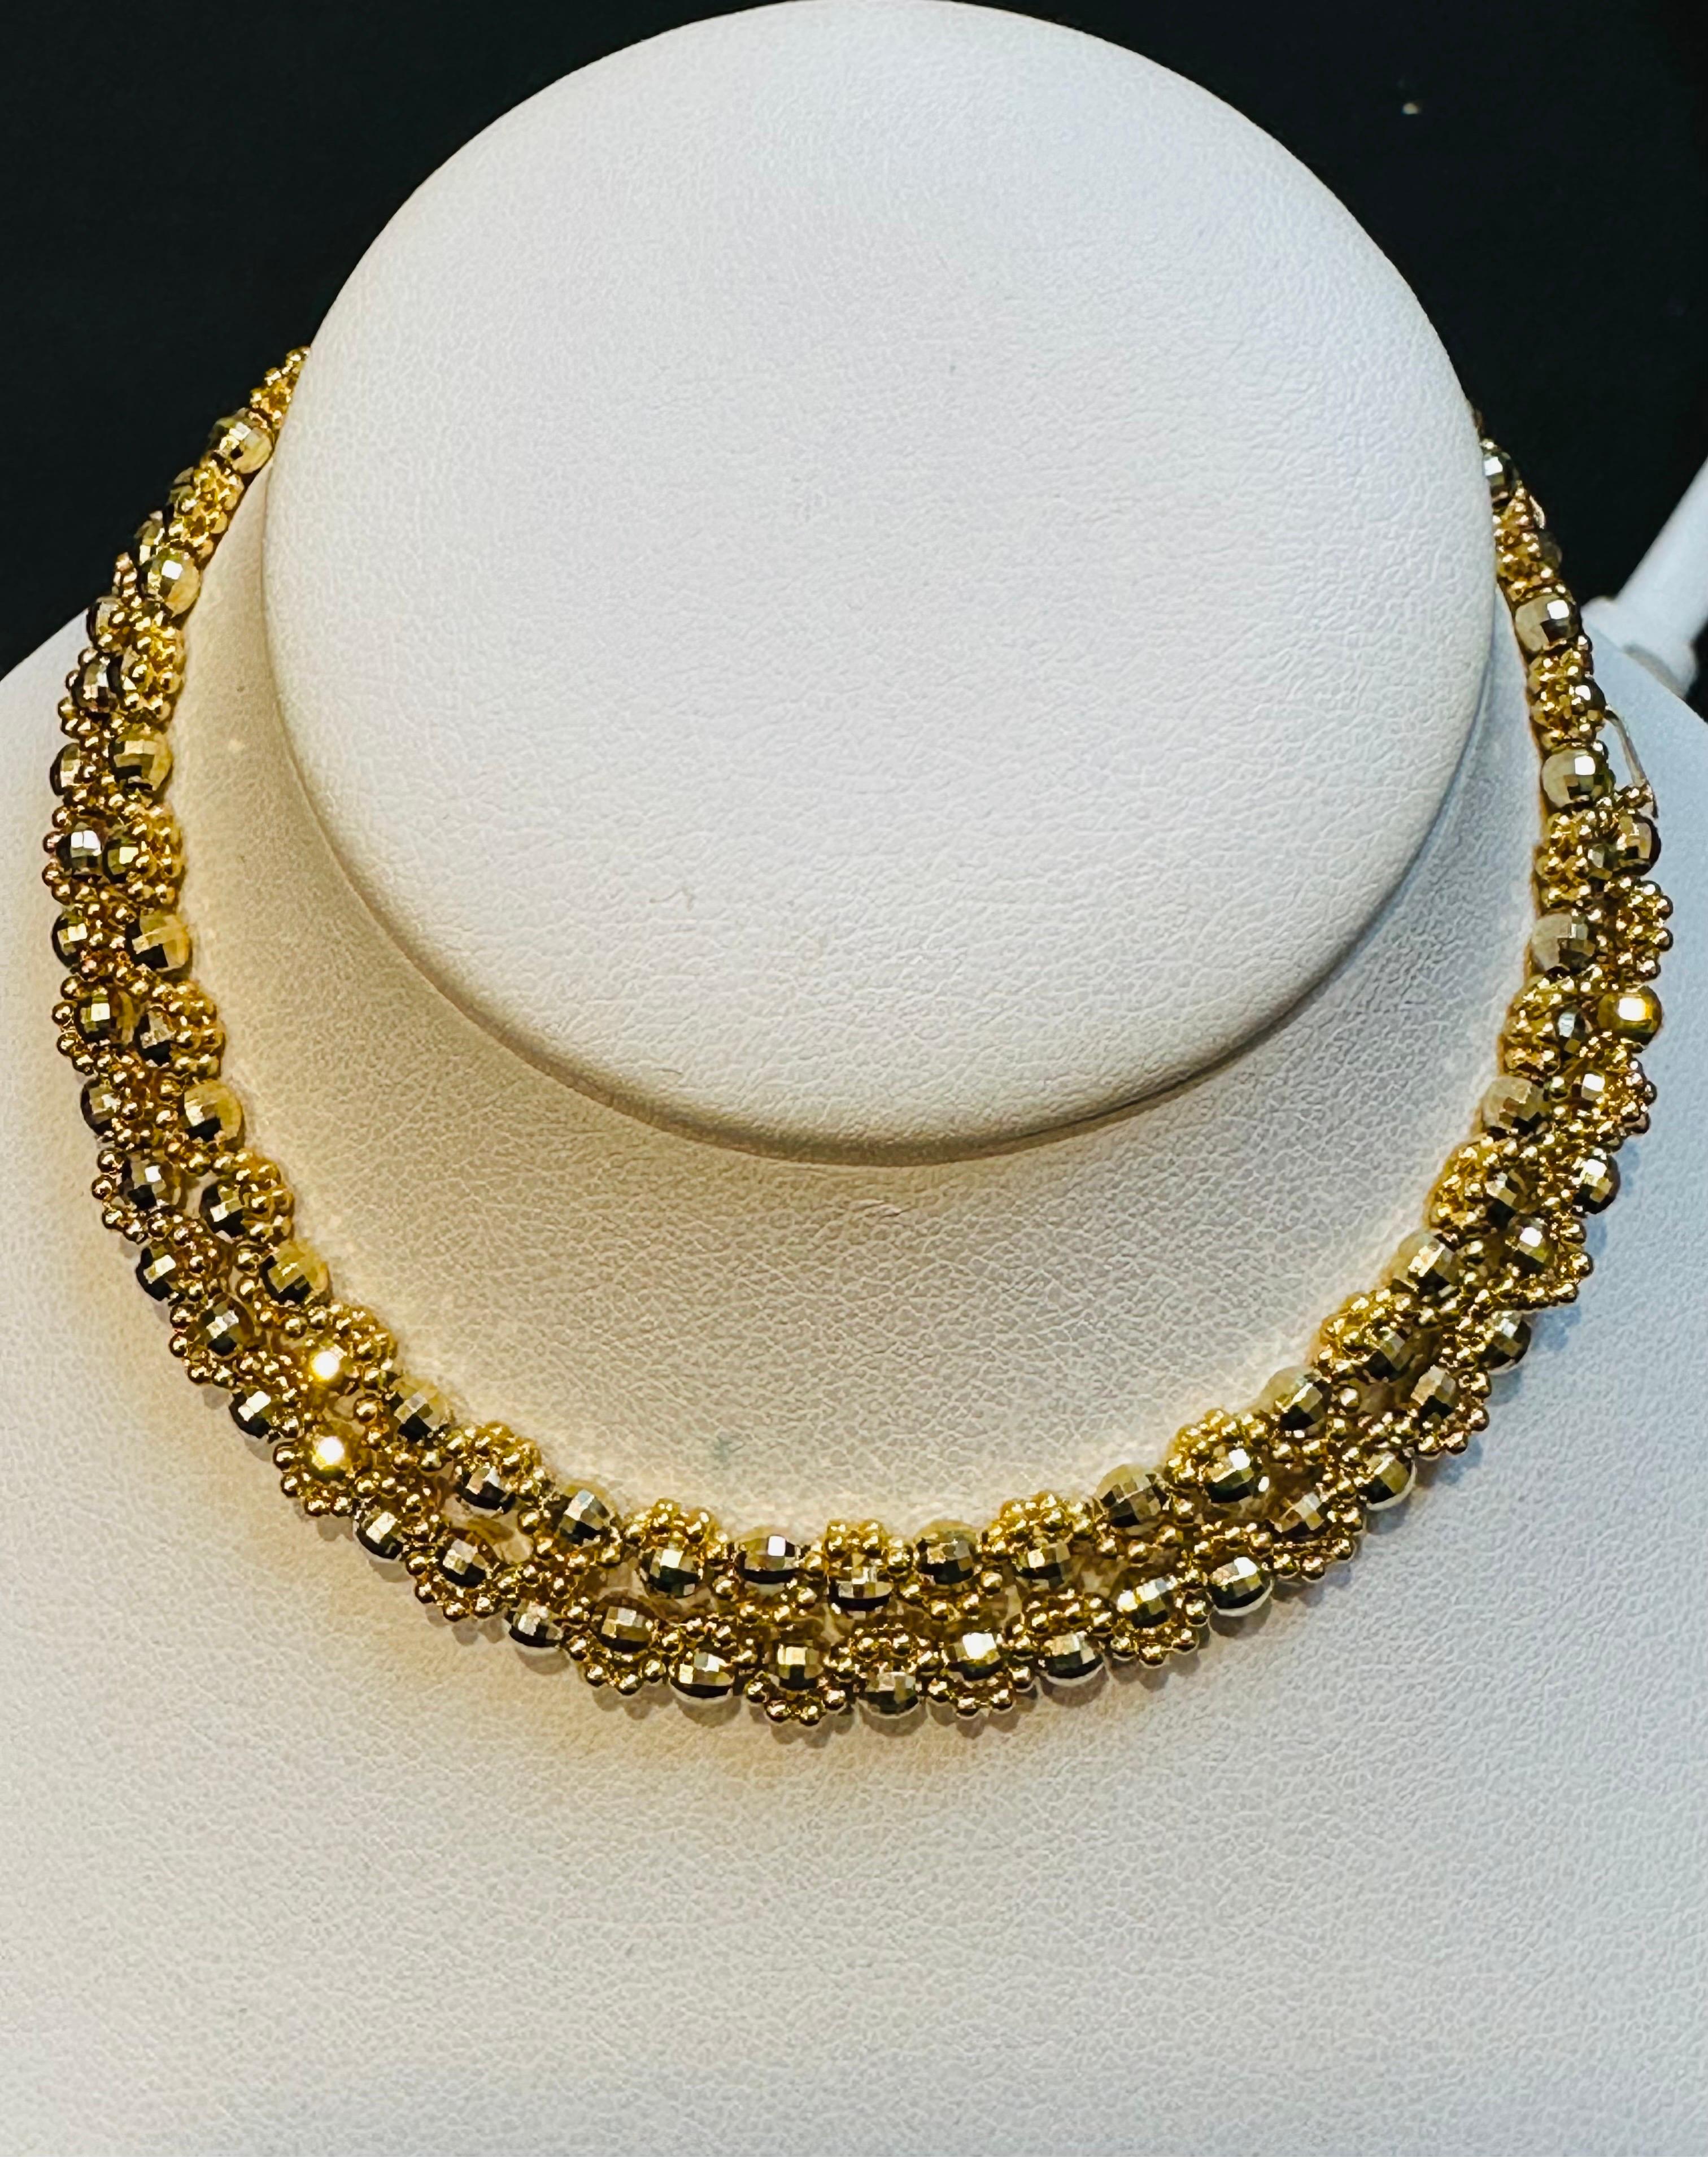 13 gram gold necklace